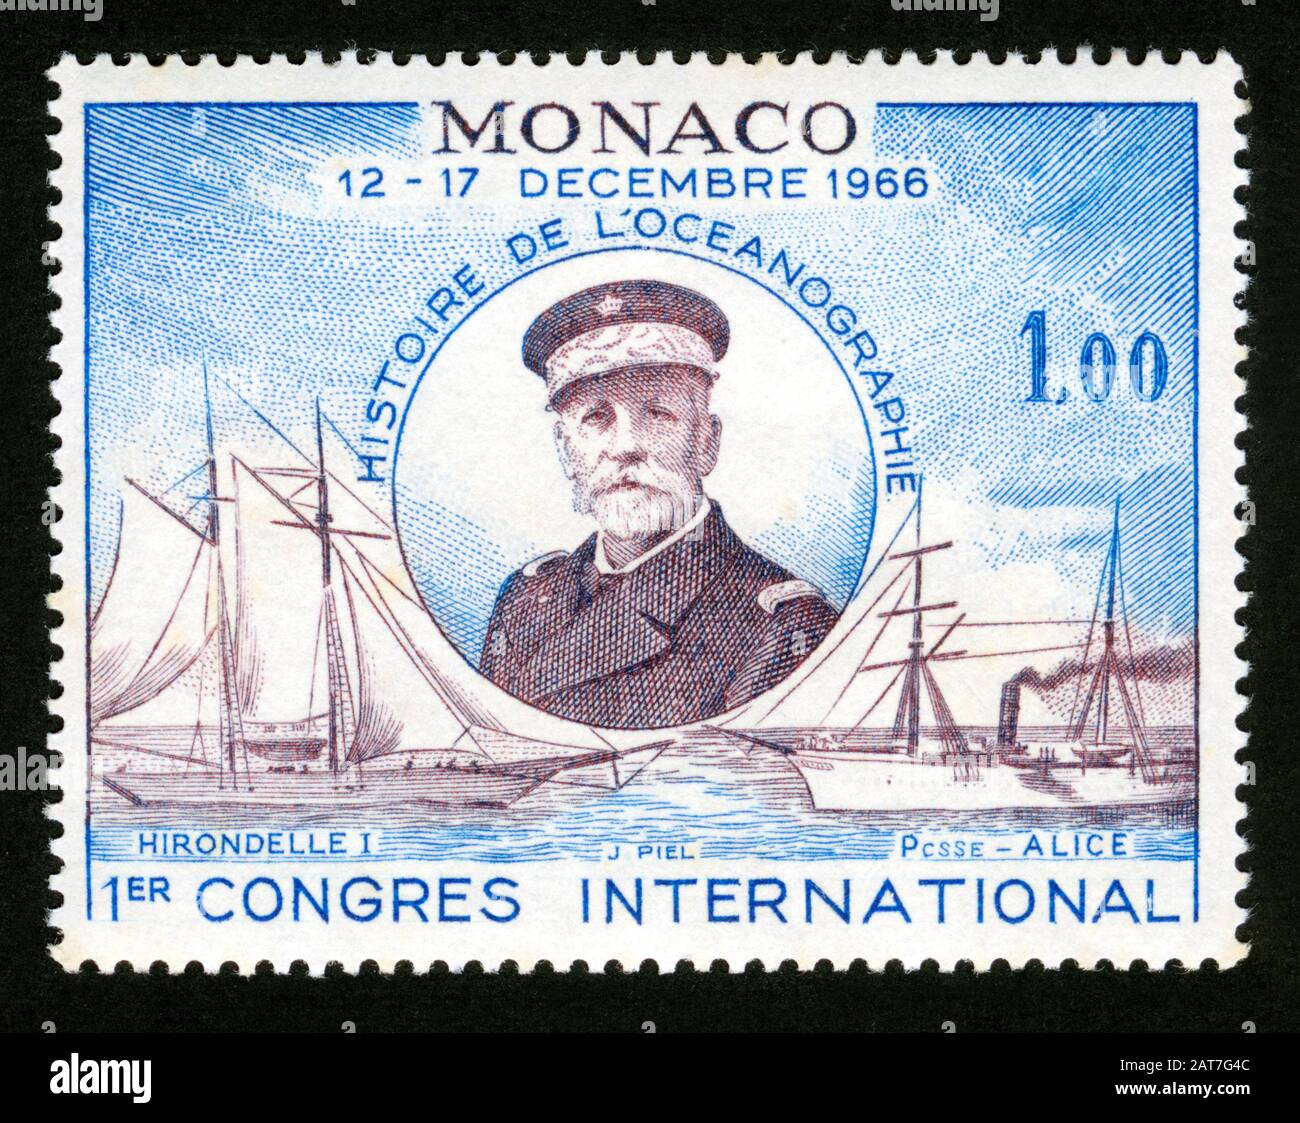 Stamp print in Monaco,1966,1 Congres International Stock Photo